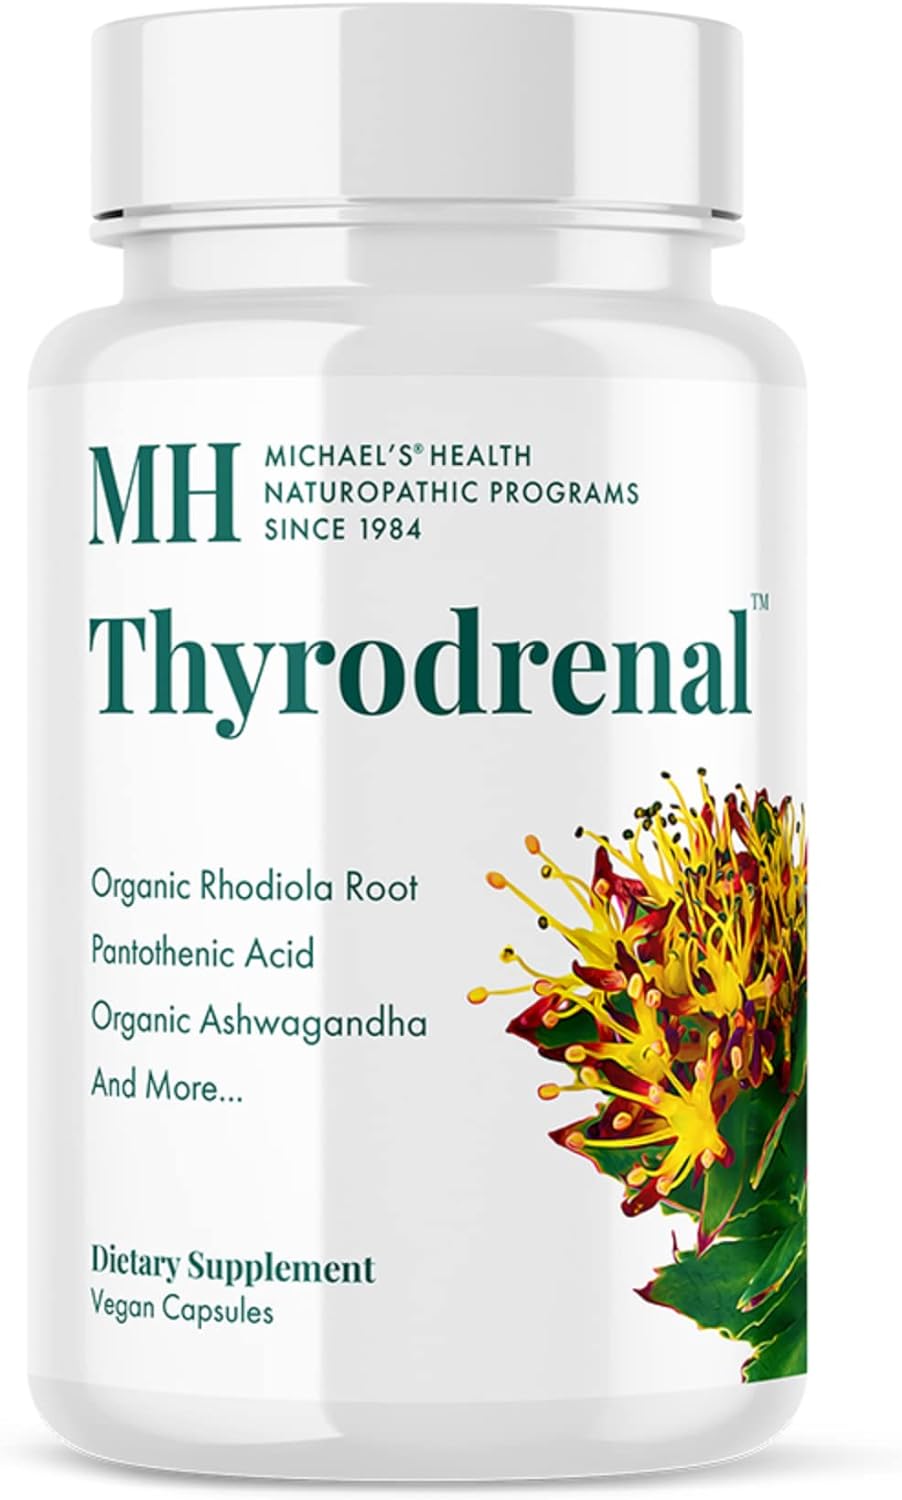 MICHAEL'S Health Naturopathic Programs Thyrodrenal - 120 Vegan Capsule2.4 Ounces